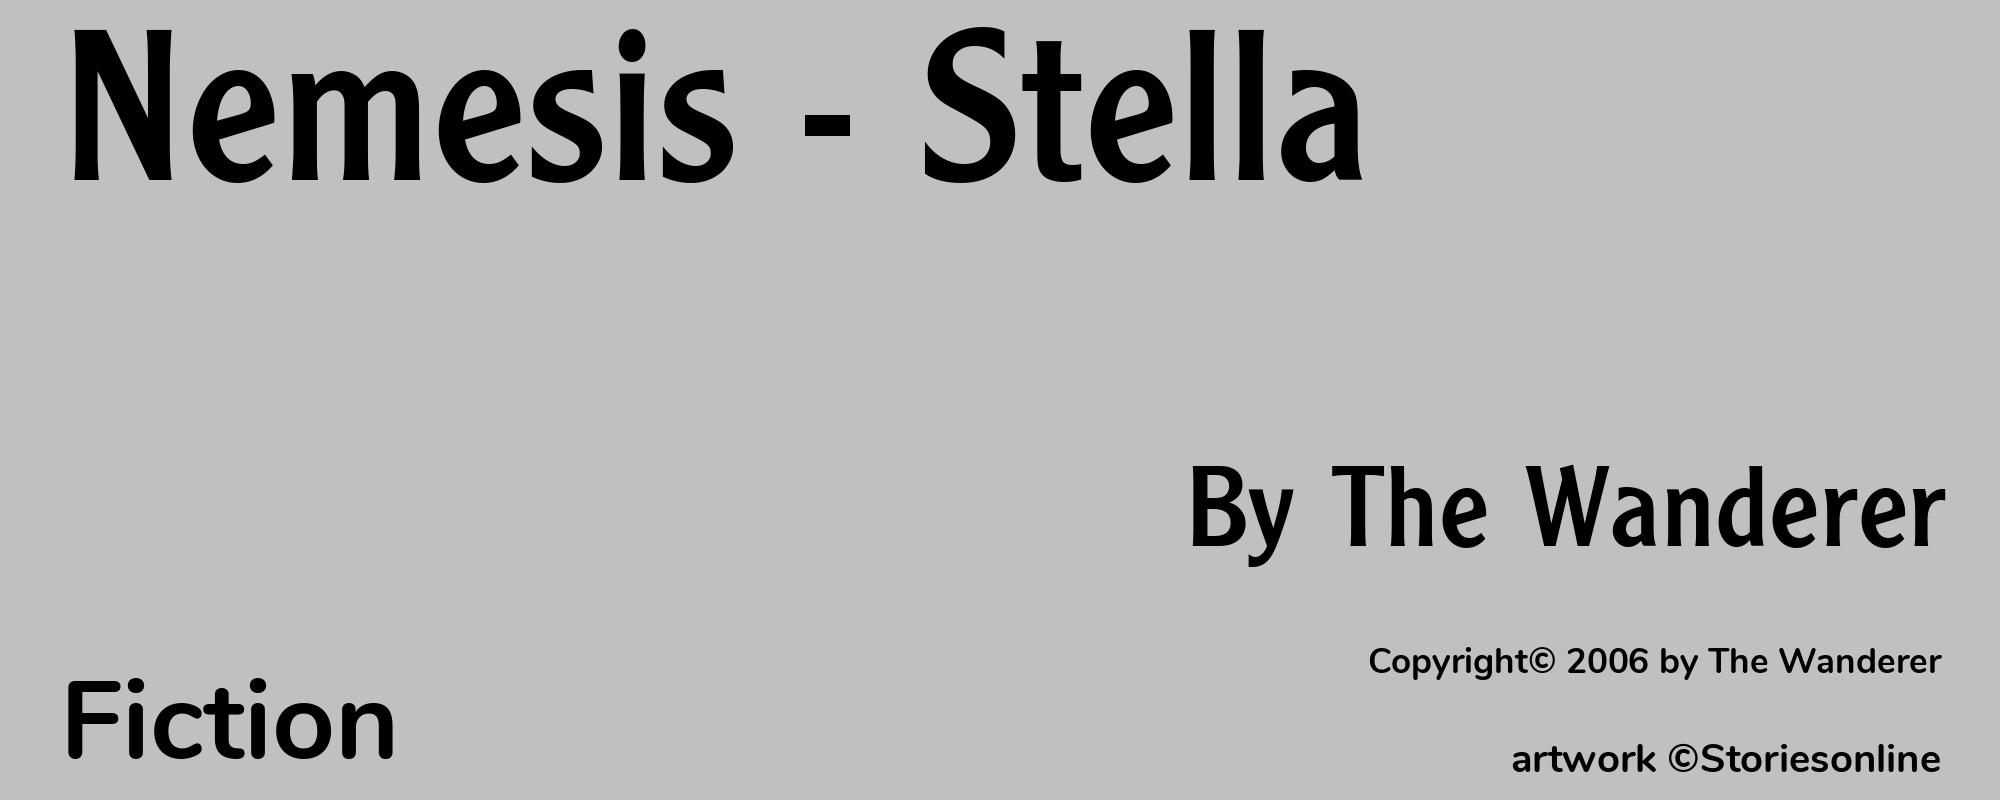 Nemesis - Stella - Cover